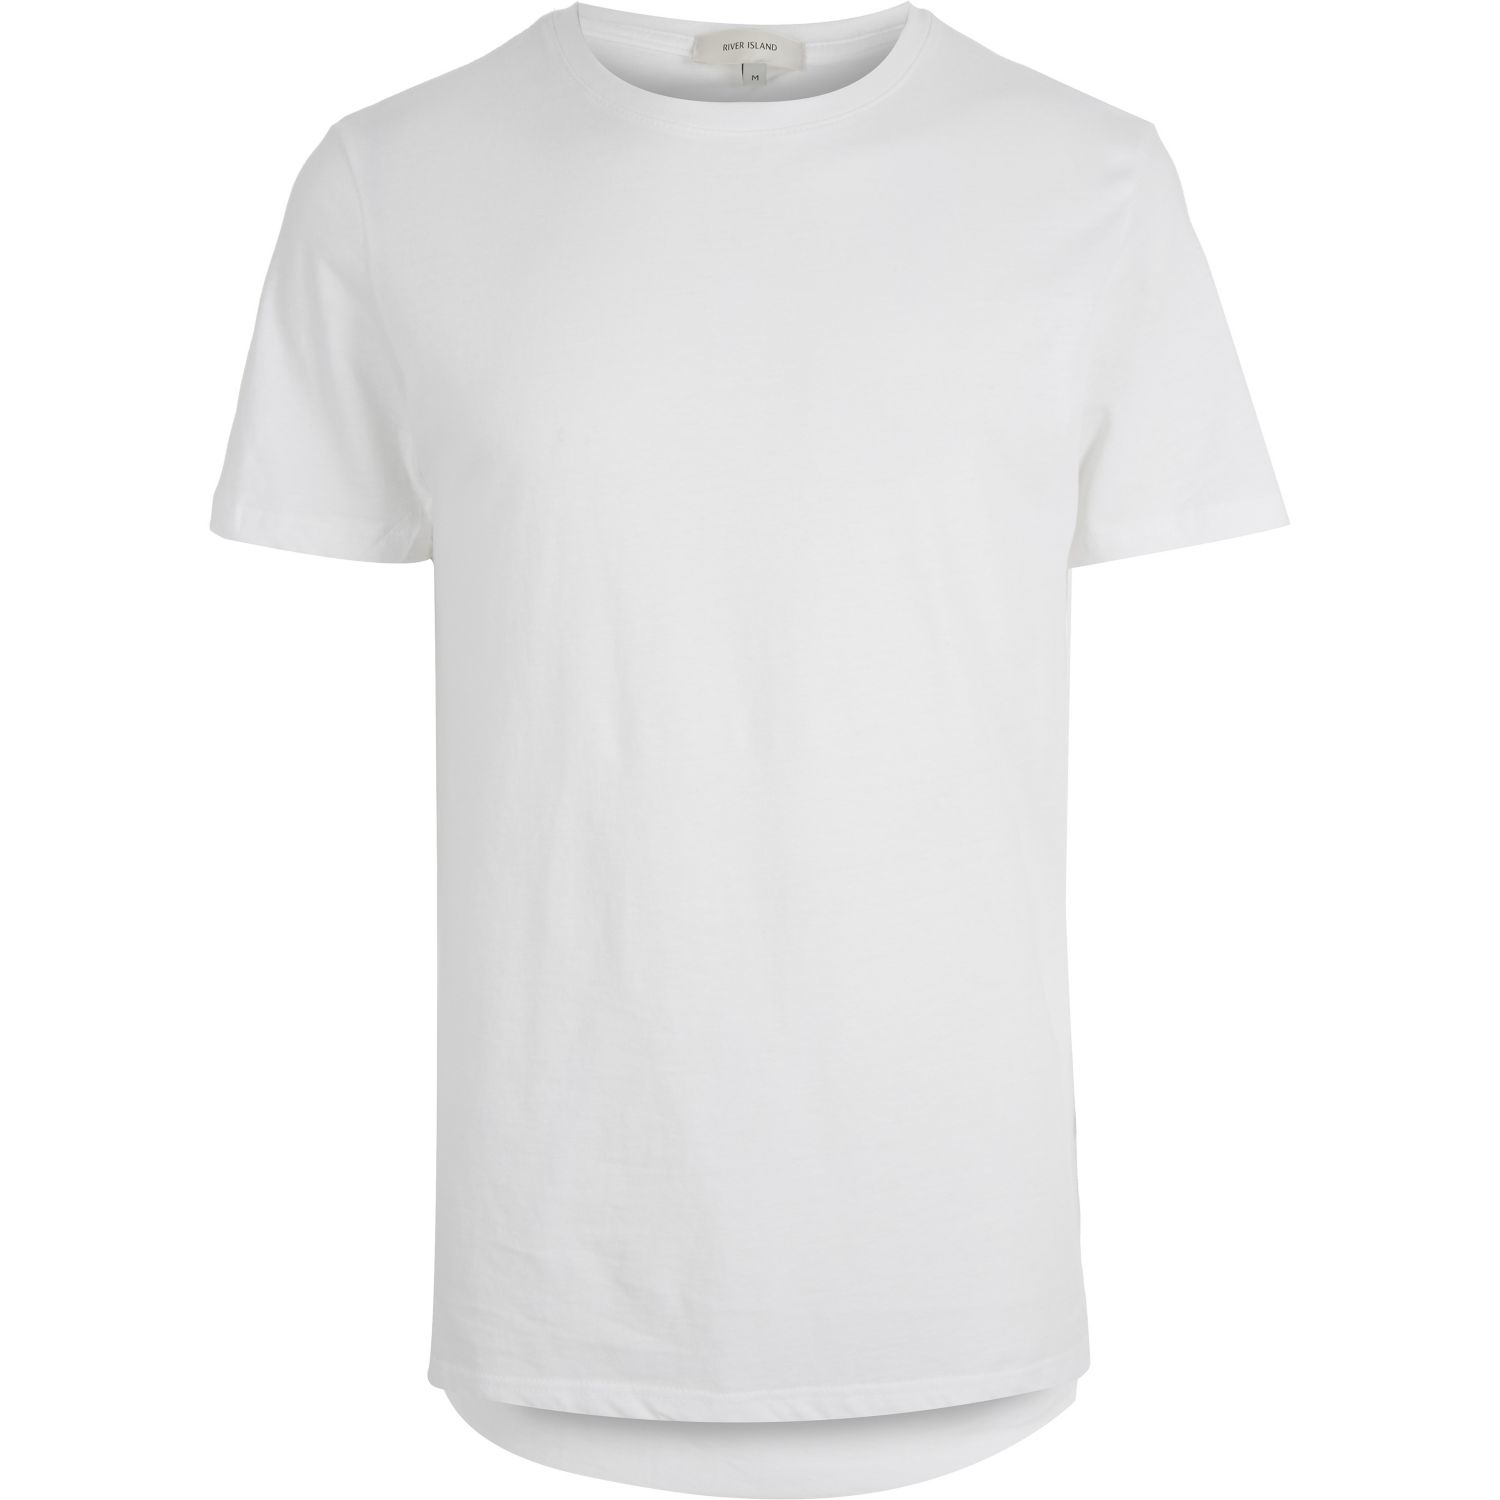 Lyst - River Island White Longline Curved Hem T-shirt in White for Men